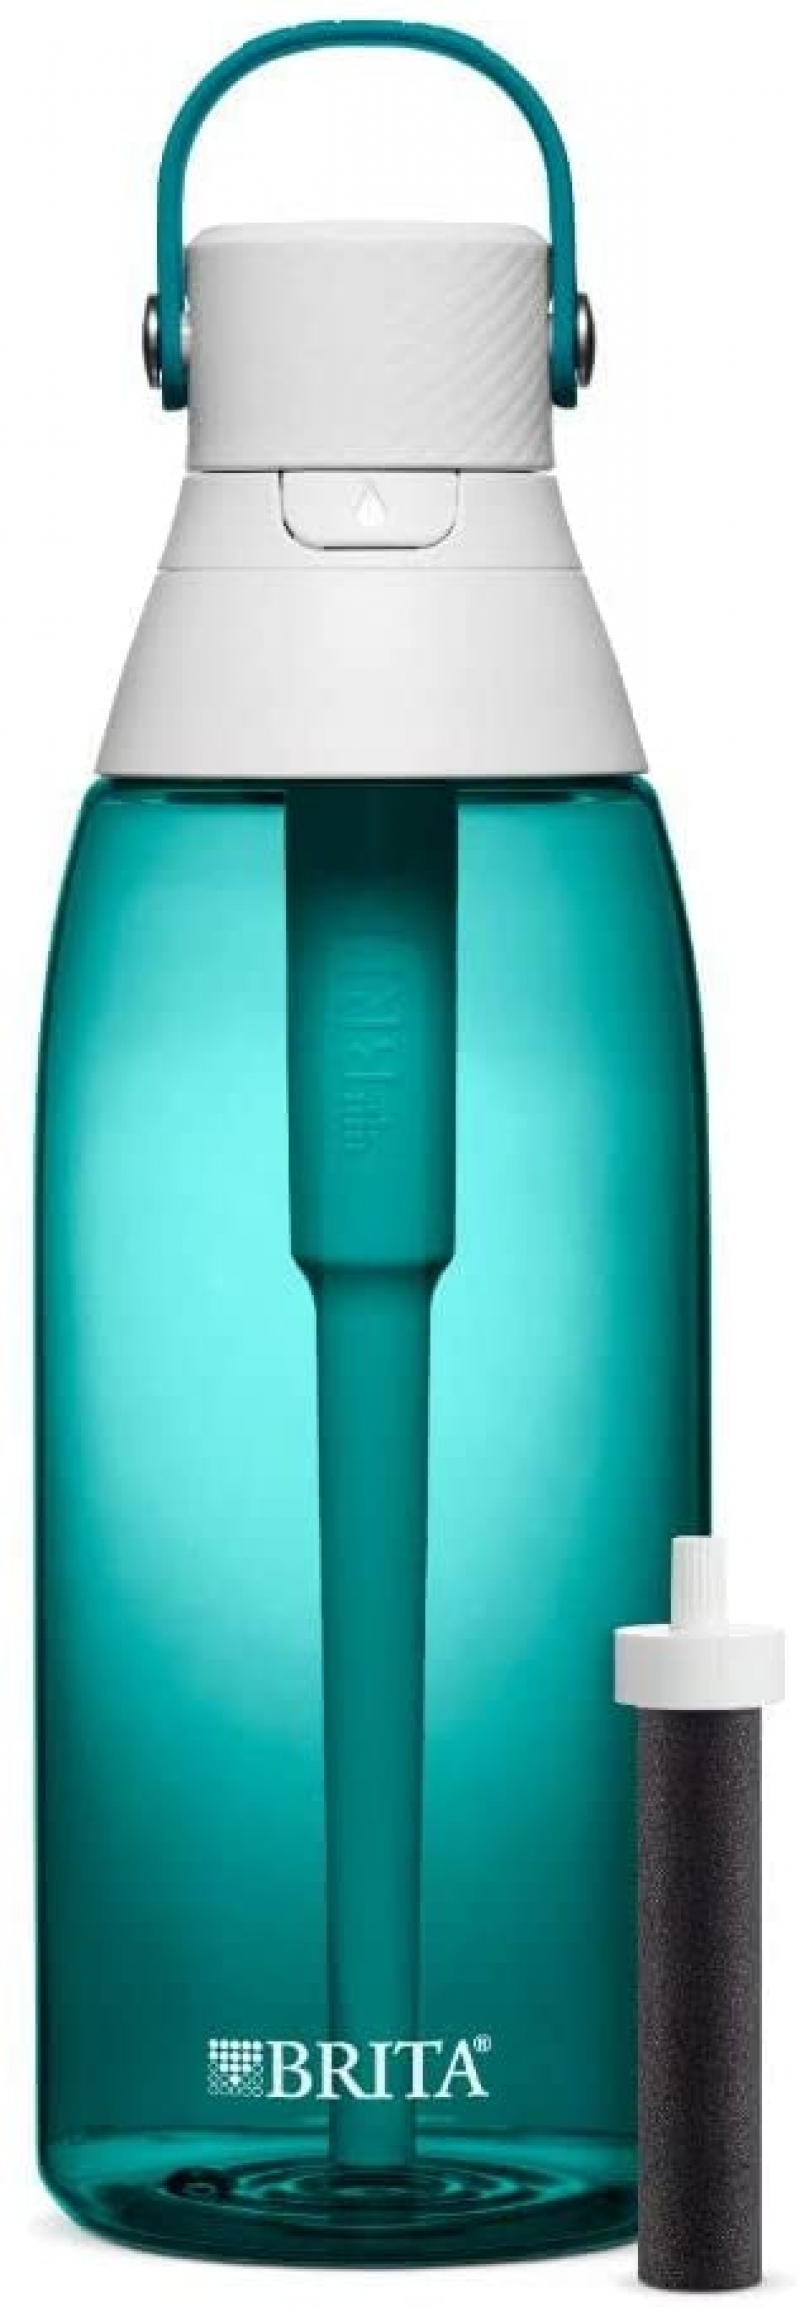 ihocon: Brita Plastic Water Filter Bottle, 36 Ounce, Sea Glass, 1 Count 隨身濾水瓶, 含濾芯